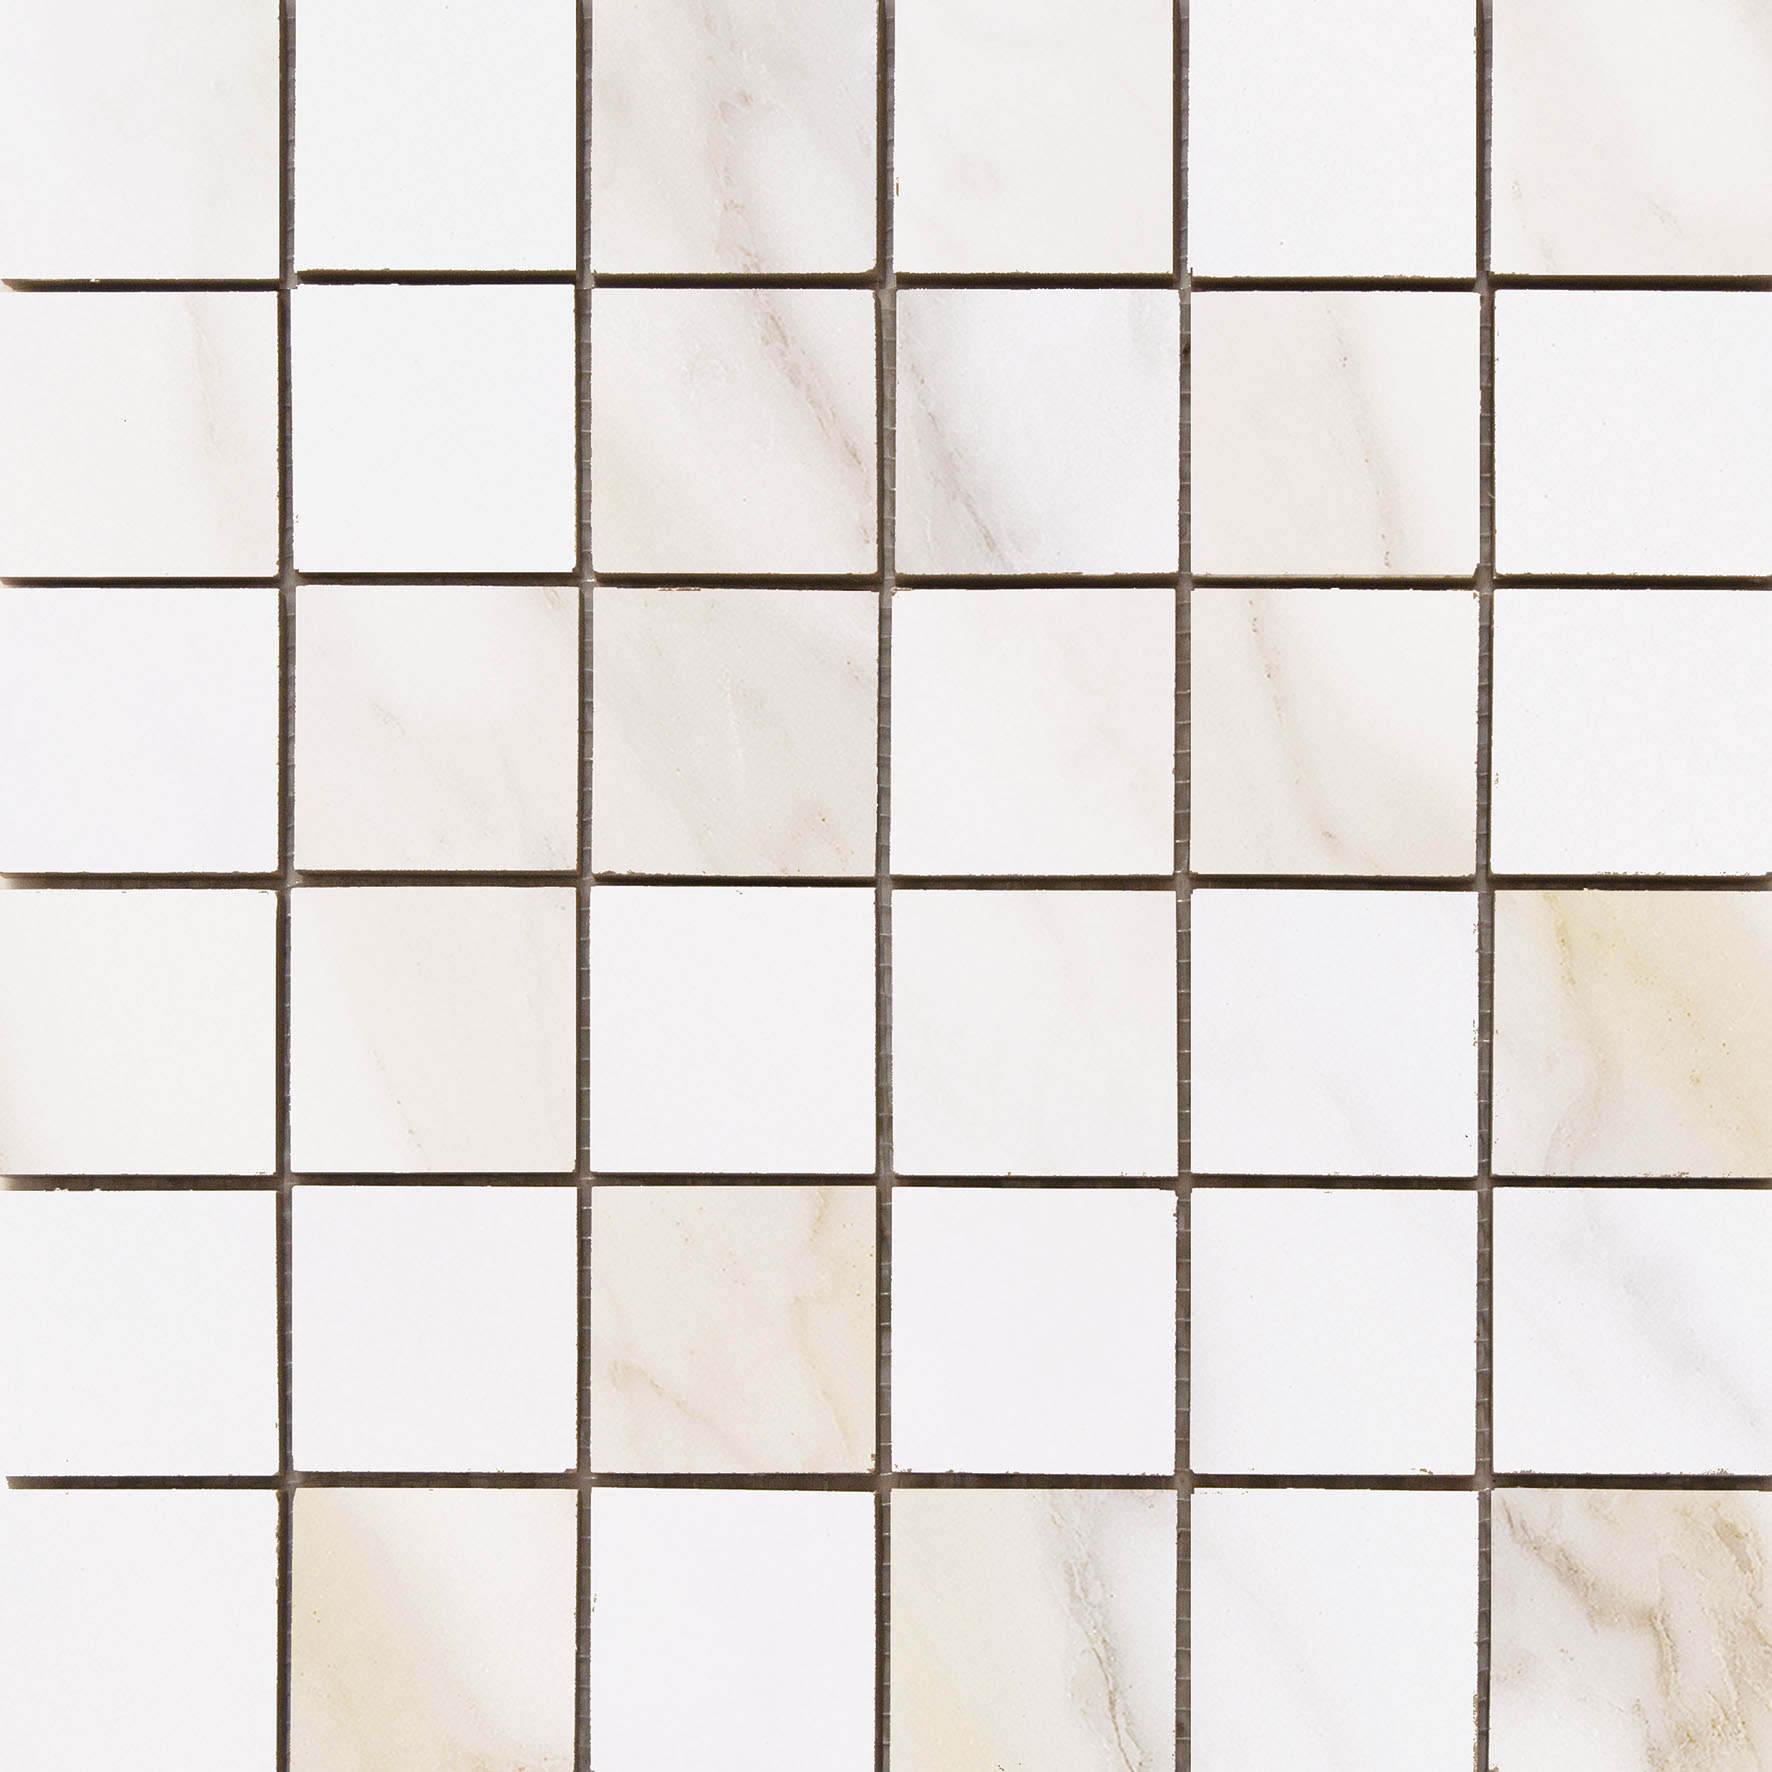 Vanezia Gres Kalmar Mosaik Marmoroptik Weiß matt 30x30cm rekt. 